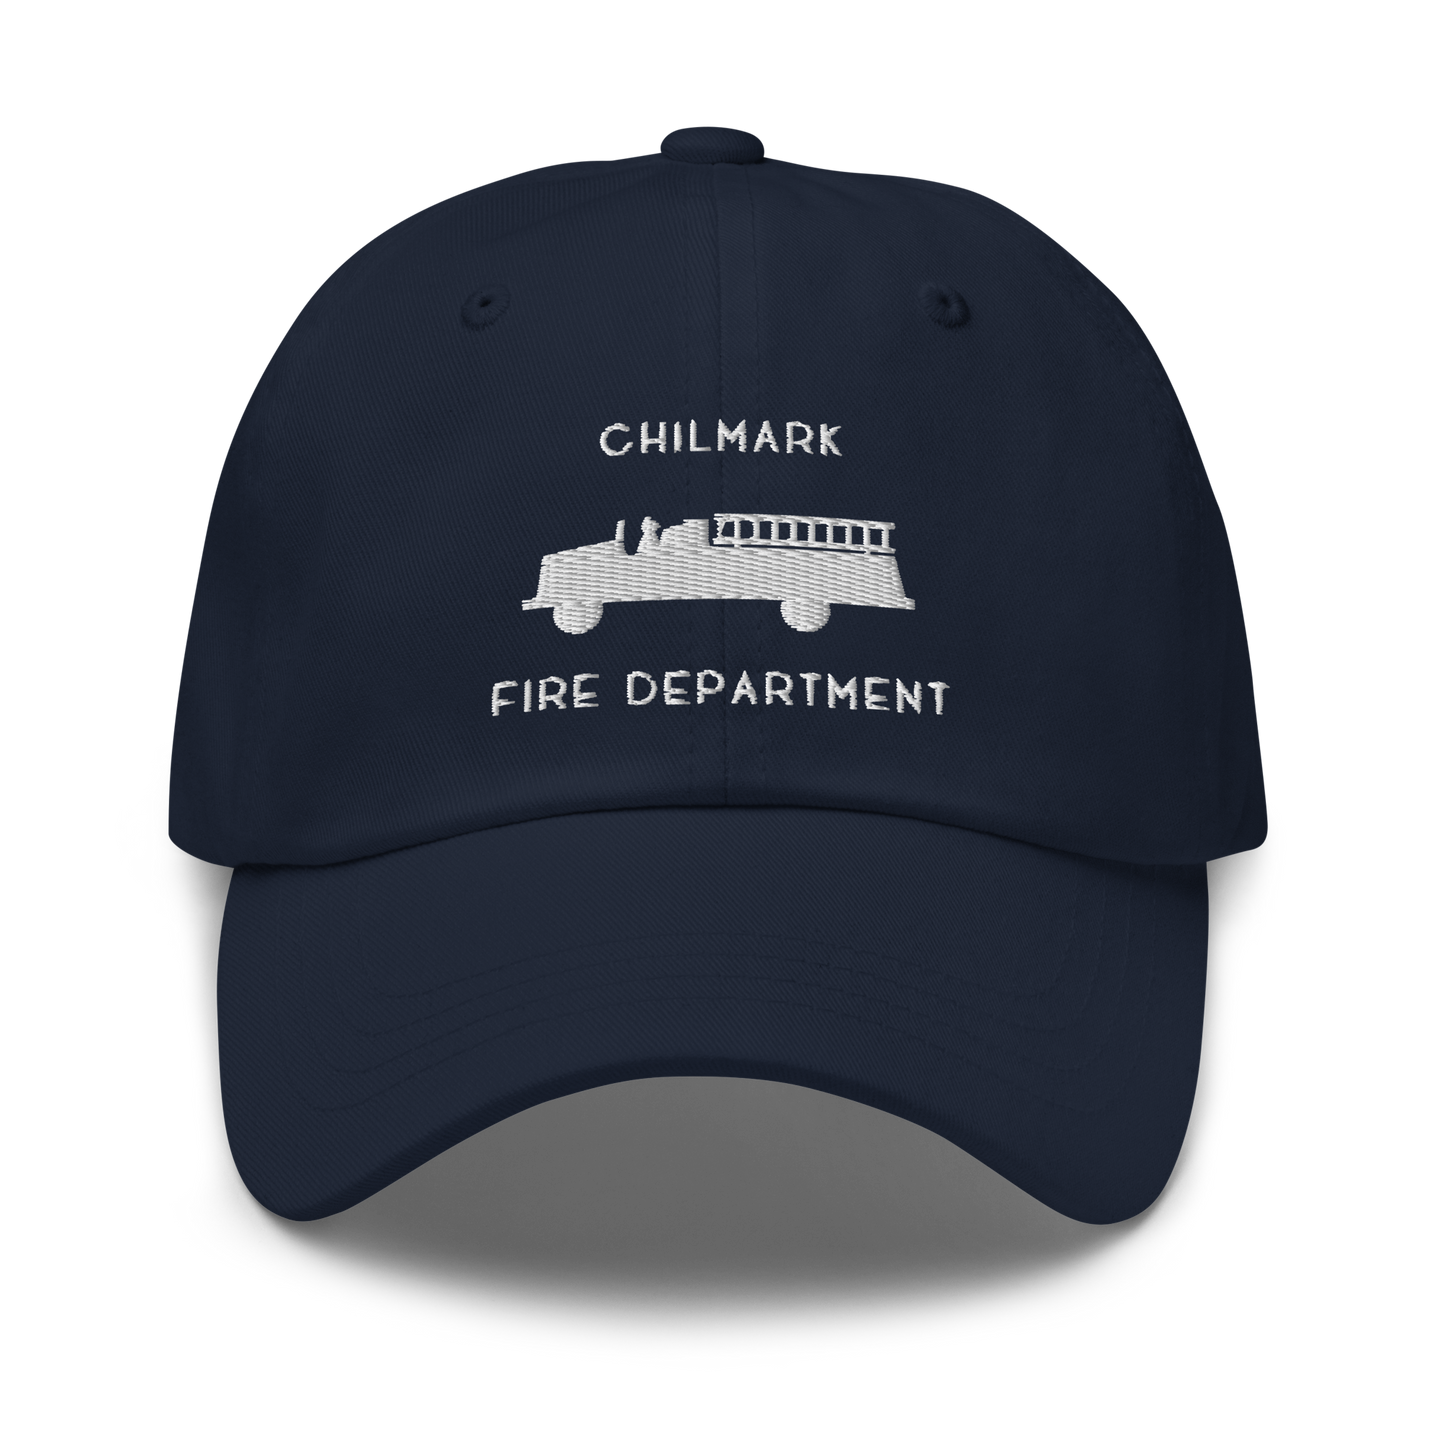 Chilmark Fire Department hat